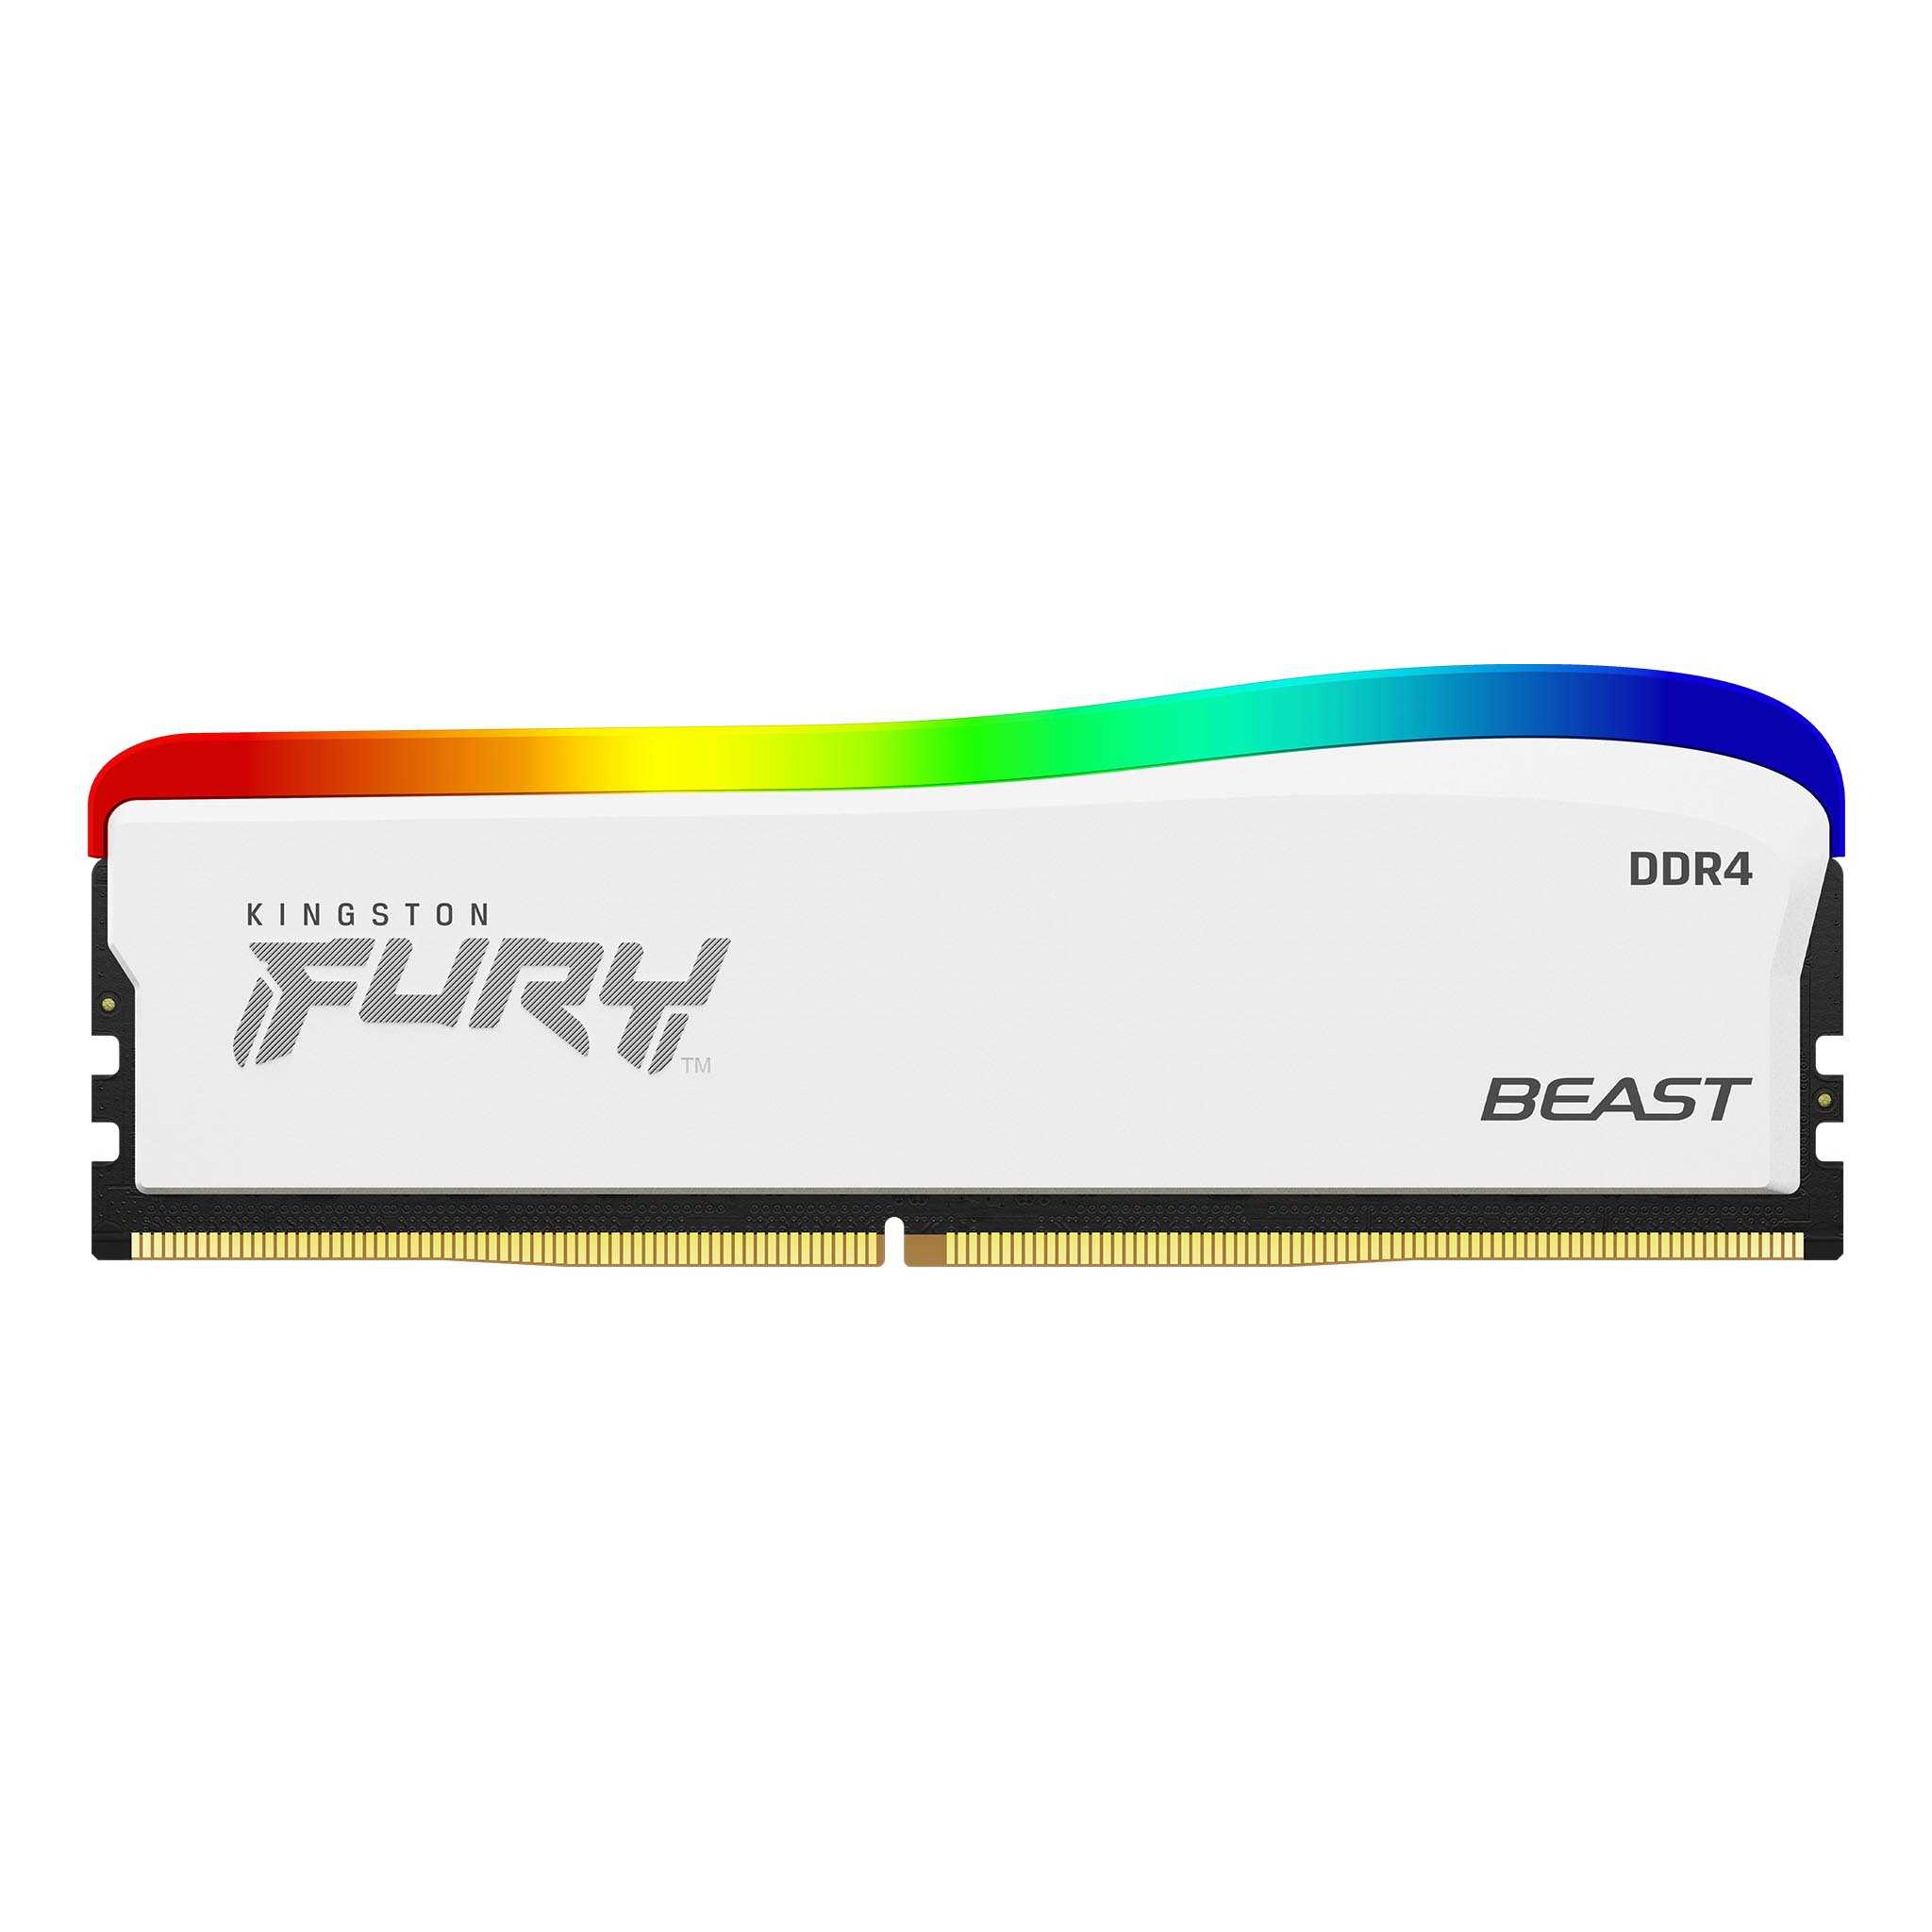 Kingston FURY™ Beast DDR4 Special Edition Memory - Kingston Technology